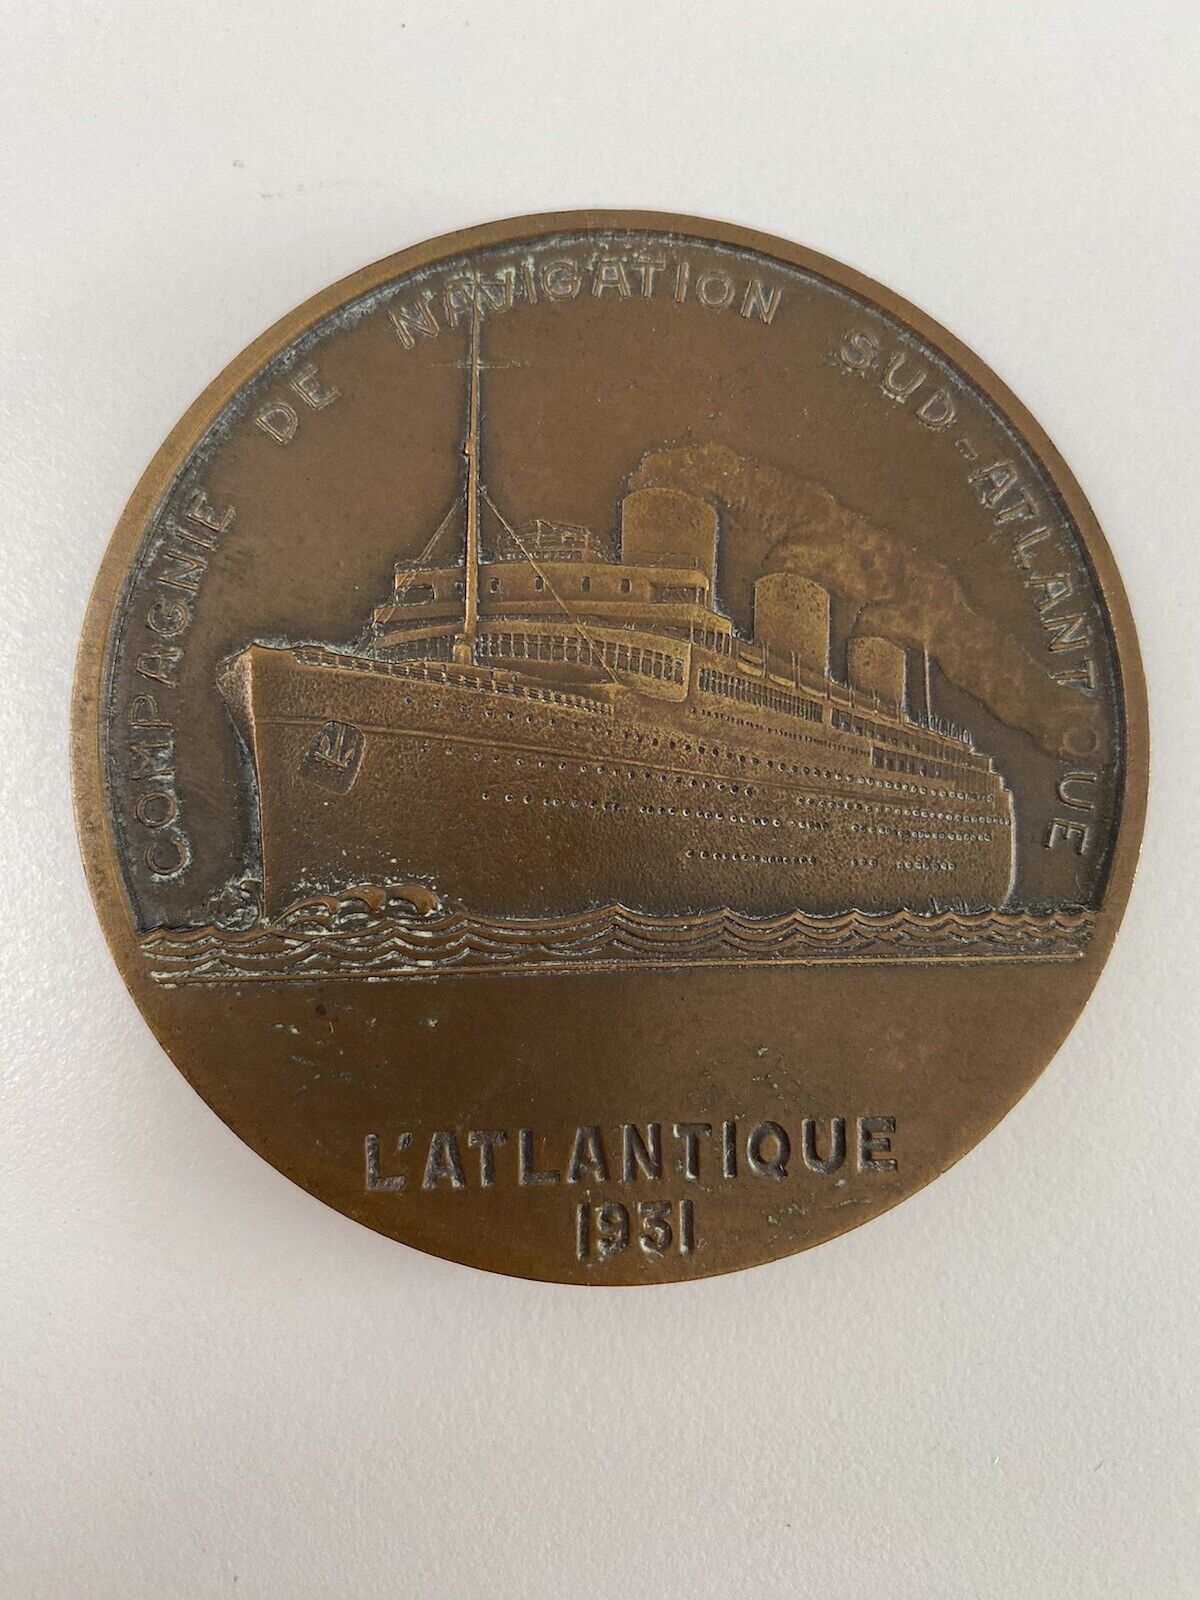 South Atlantic Shipping Company Shipboat Medal